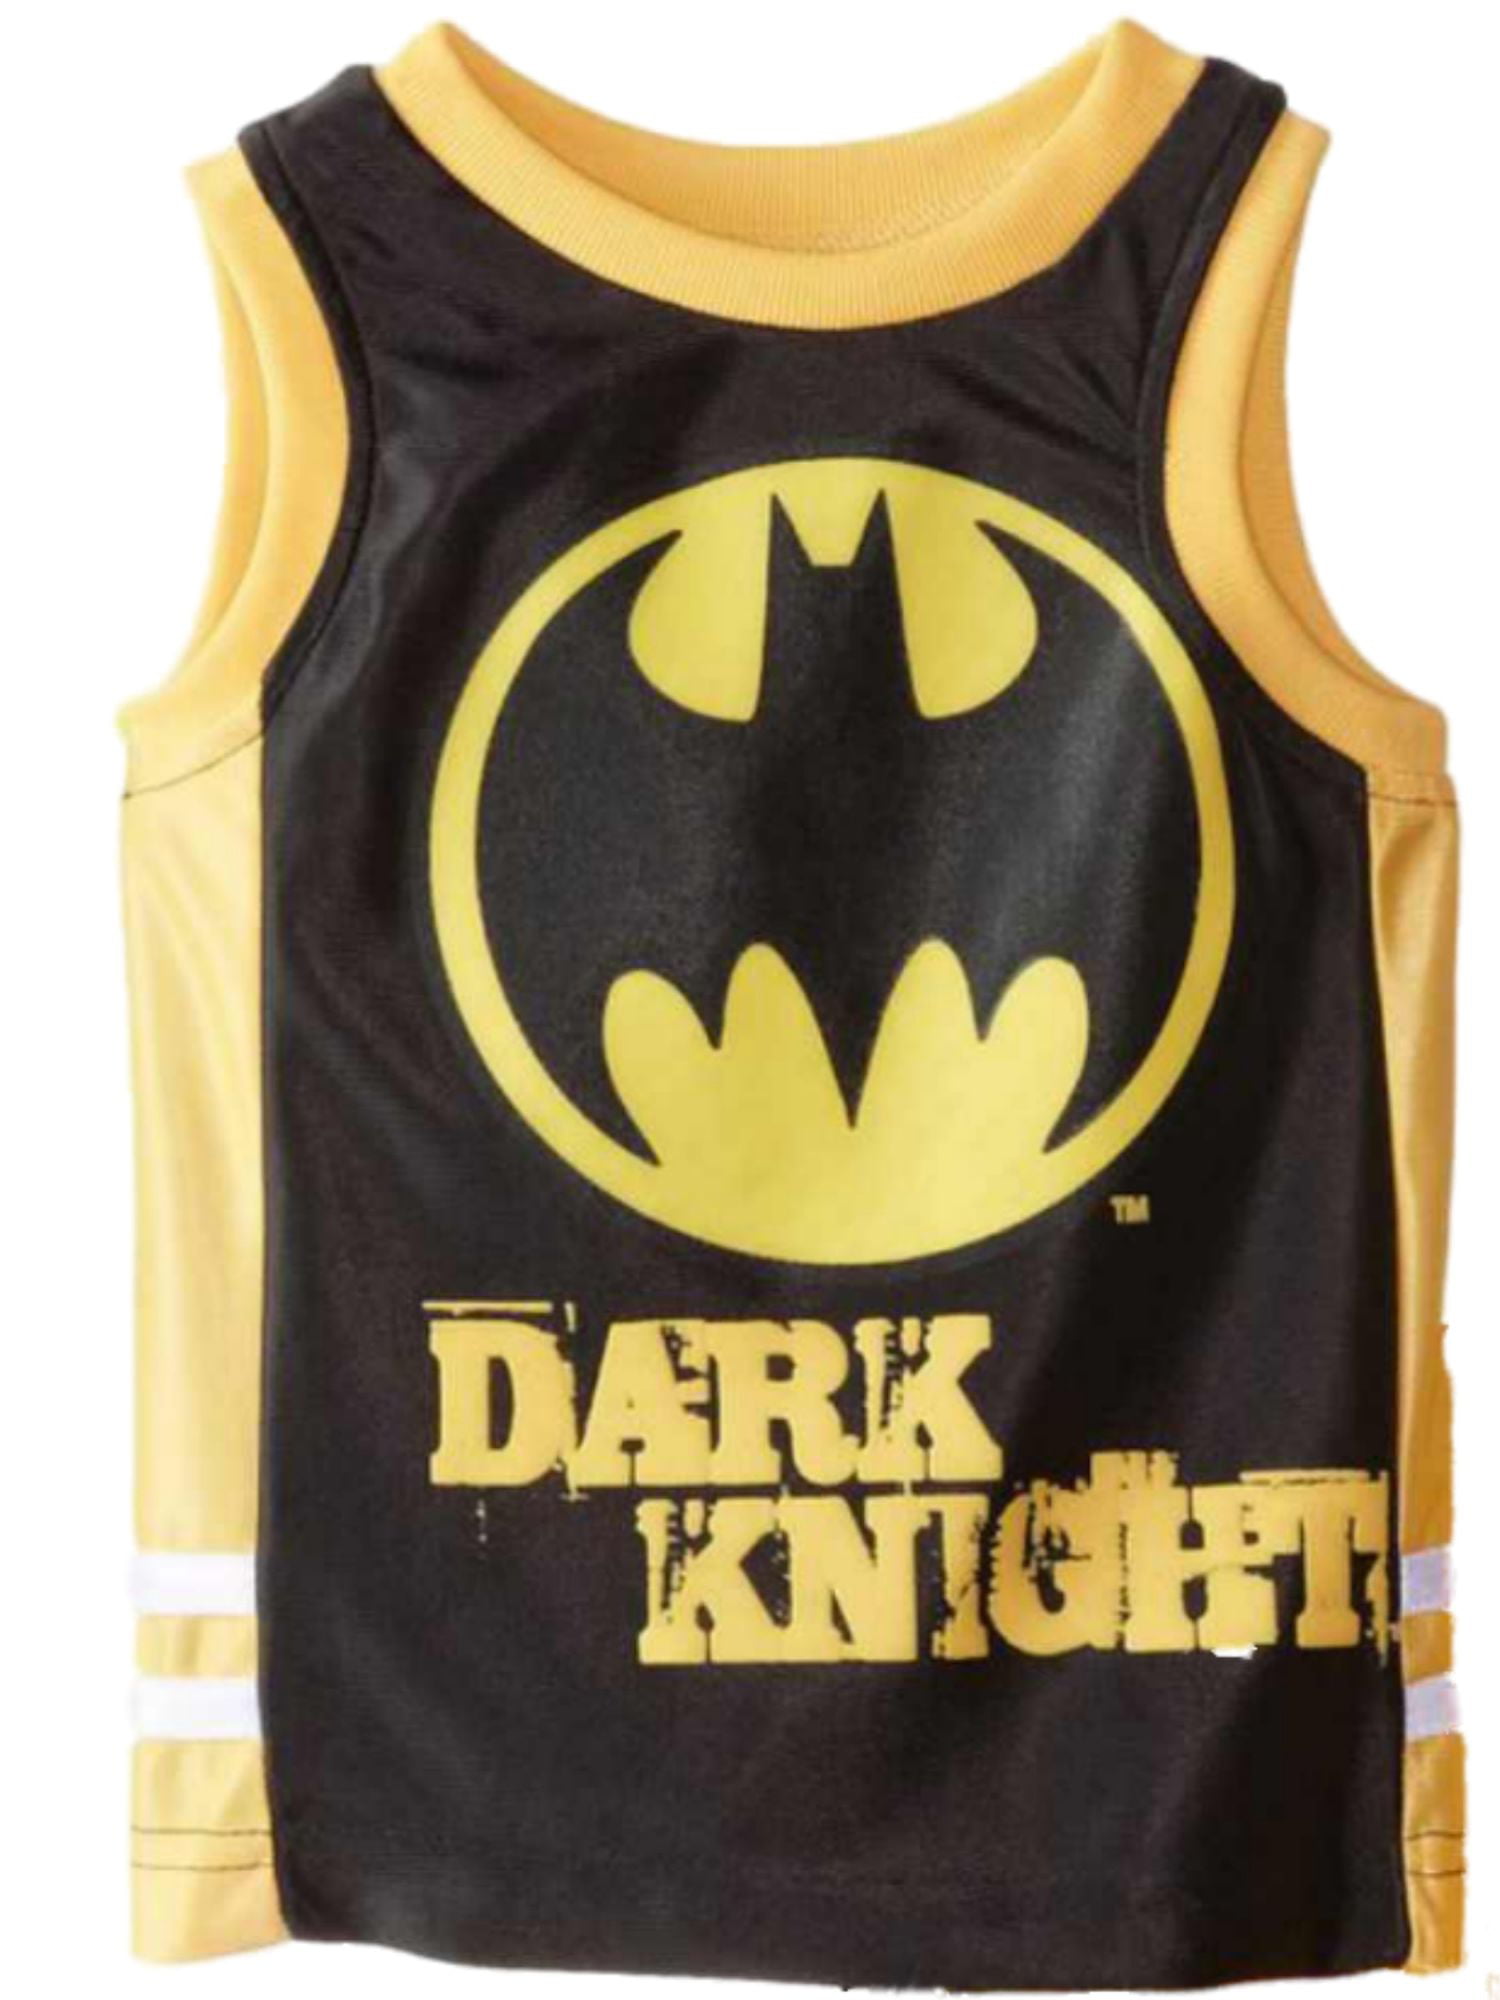 Birthday Gift Idea for Boys Official Merchandise DC Comics Batman Here Comes Batman Boys T-Shirt Dark Knight Superhero Top